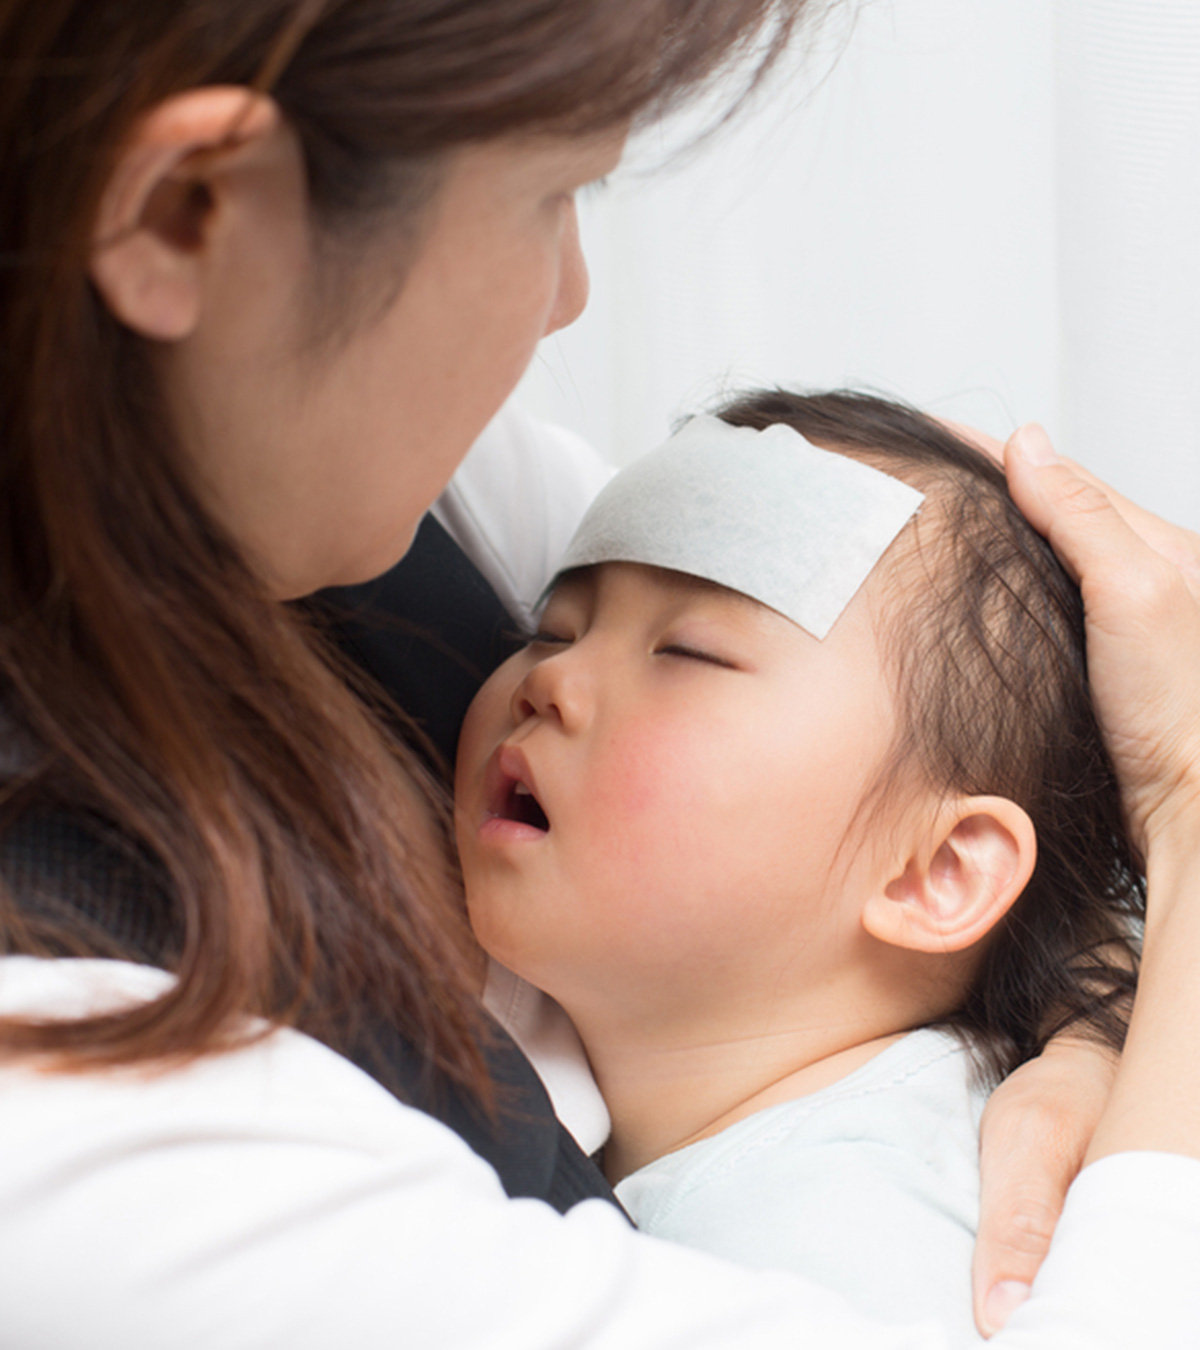 बच्चों को लू लगना: लक्षण, कारण व घरेलू उपाय | Bacho Ko Lu (Heat Stroke) Lagna